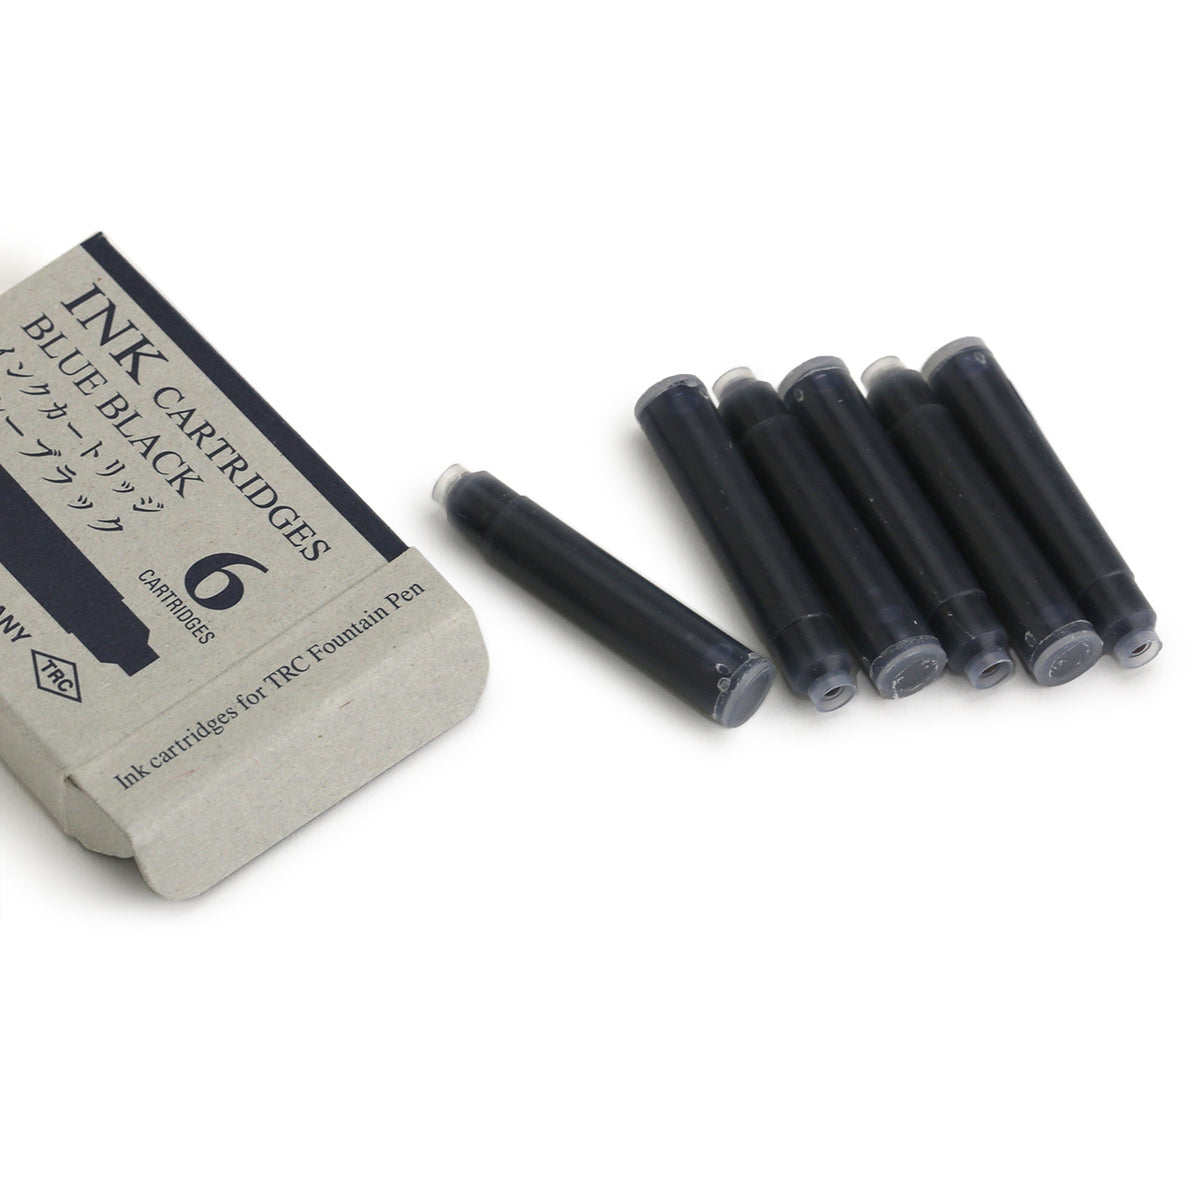 six blue-black ink cartridges and their kraft package